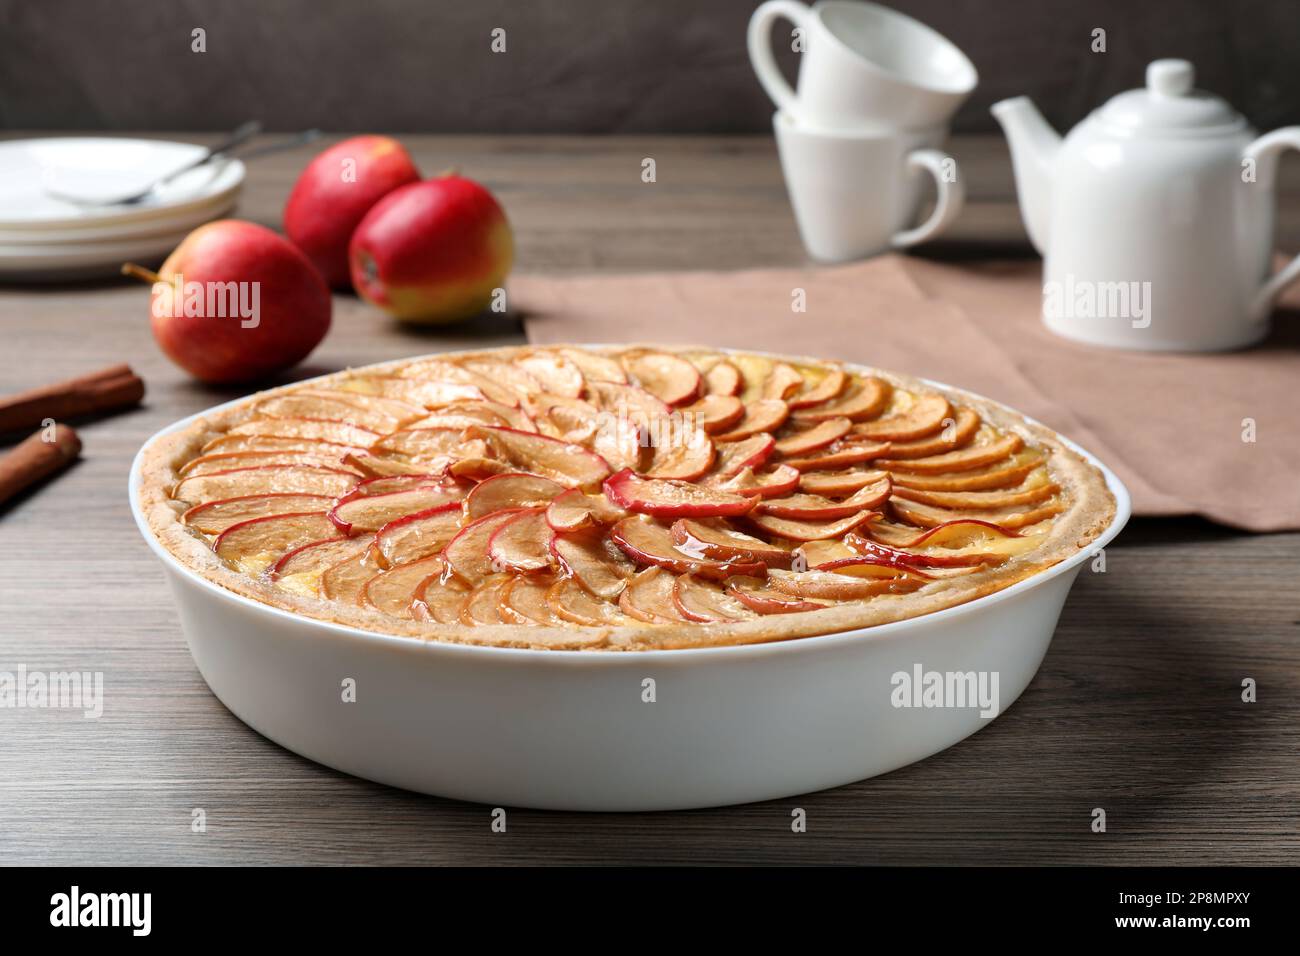 Tasty apple pie in baking dish on wooden table Stock Photo